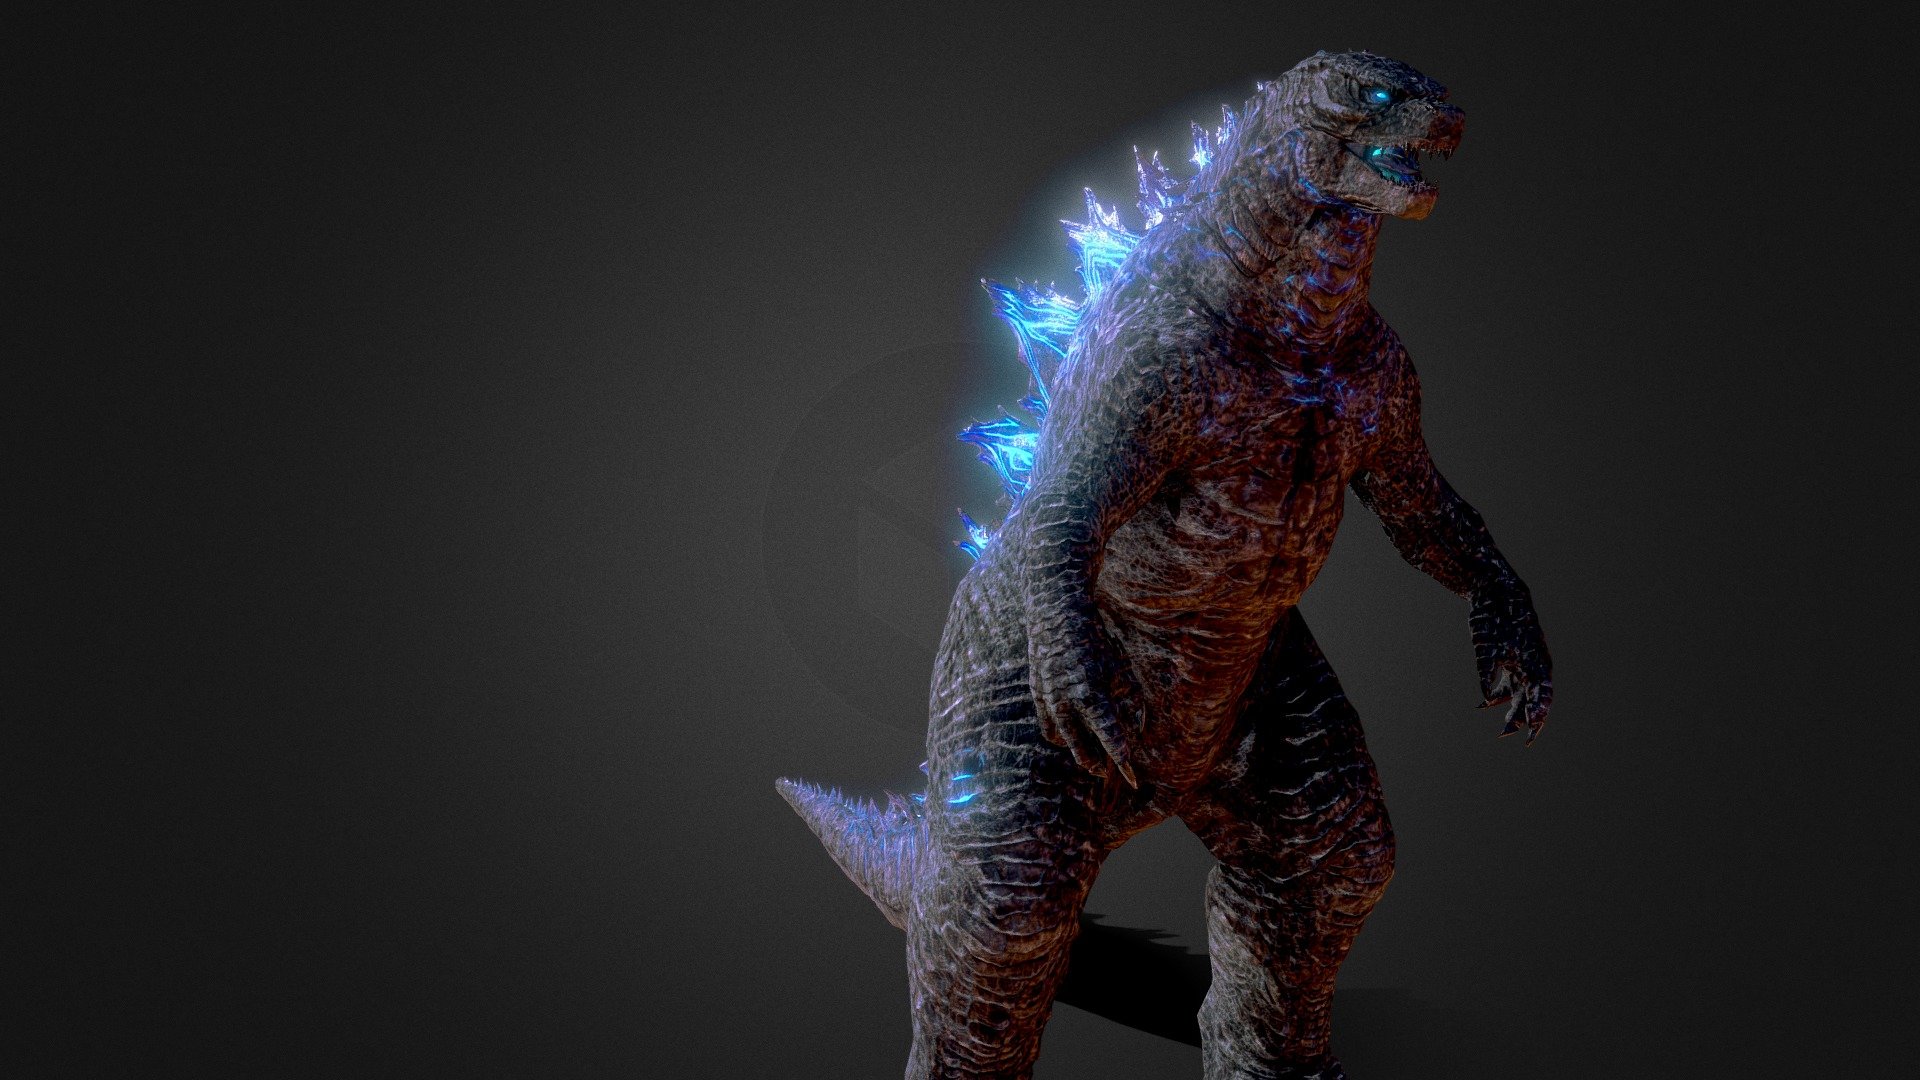 subscribe to my channel link https://www.youtube.com/channel/UC4OENn18rGbmHCc1nWRLY3A - Godzilla 2021 New Rig - 3D model by ᄂΣVIП X GΛMIПG (@levin.gaming) 3d model